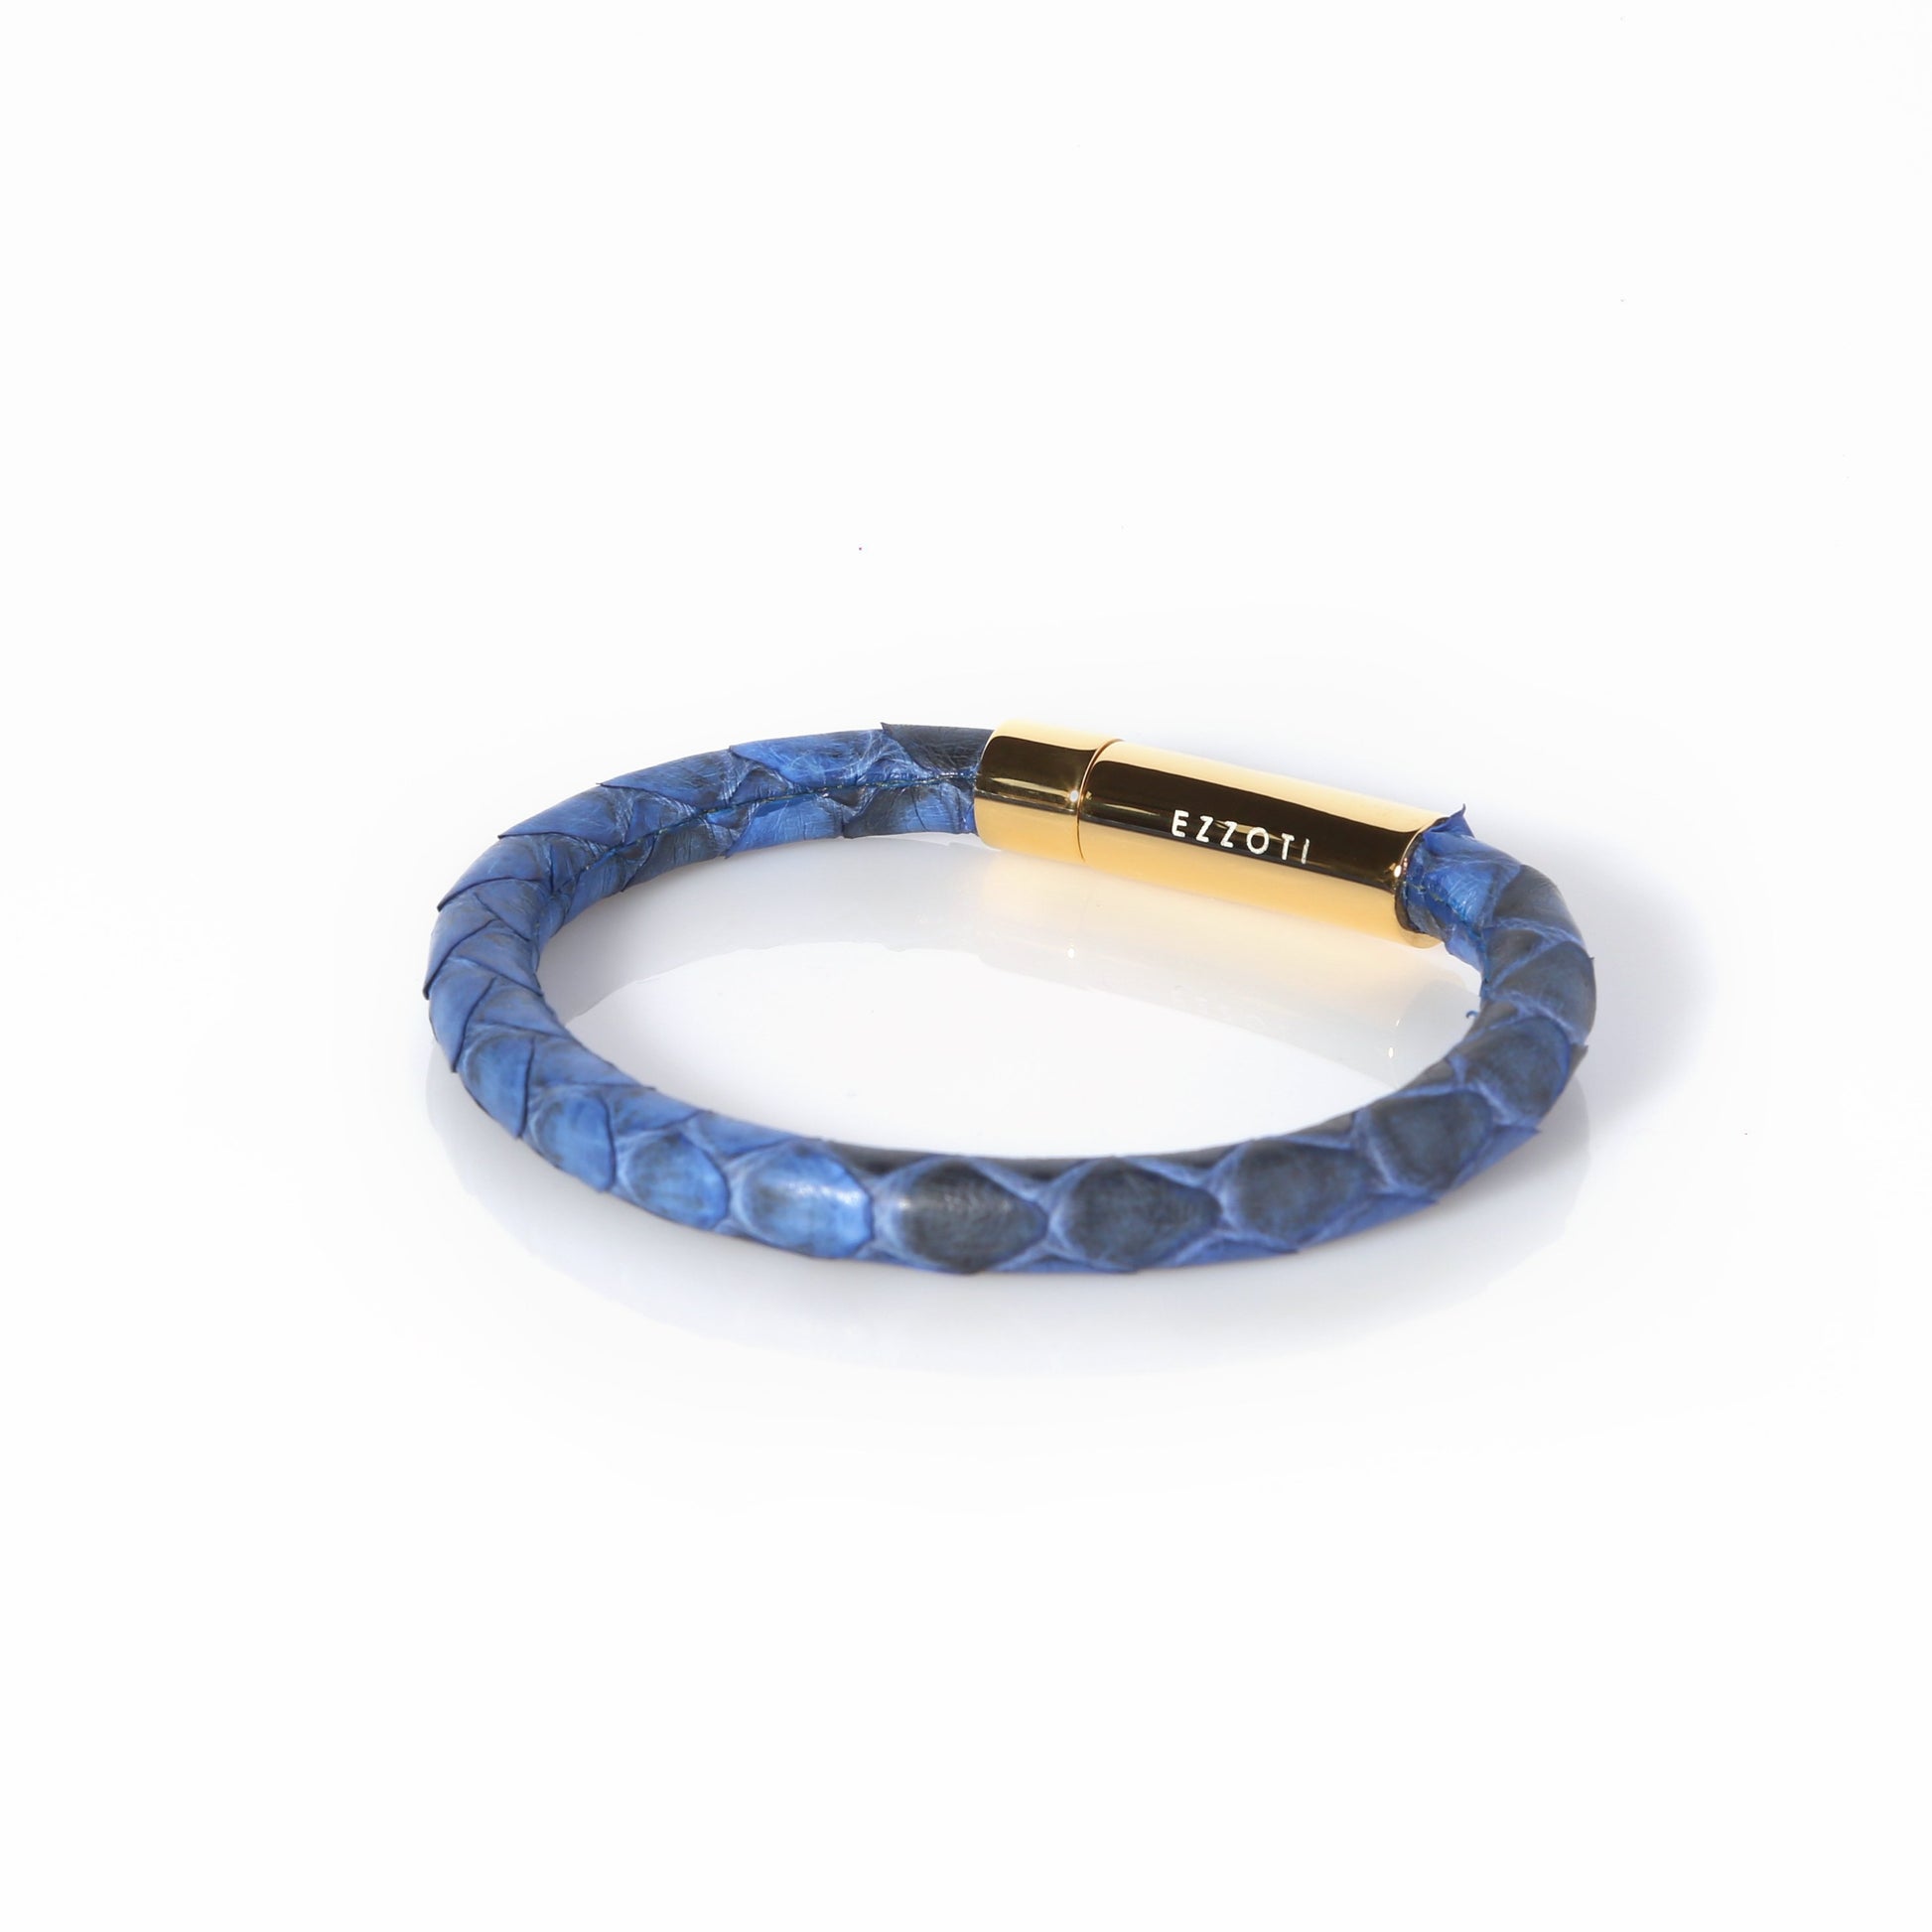 Amaris Genuine Python Leather Bracelet - Blue/Gold - EZZOTI